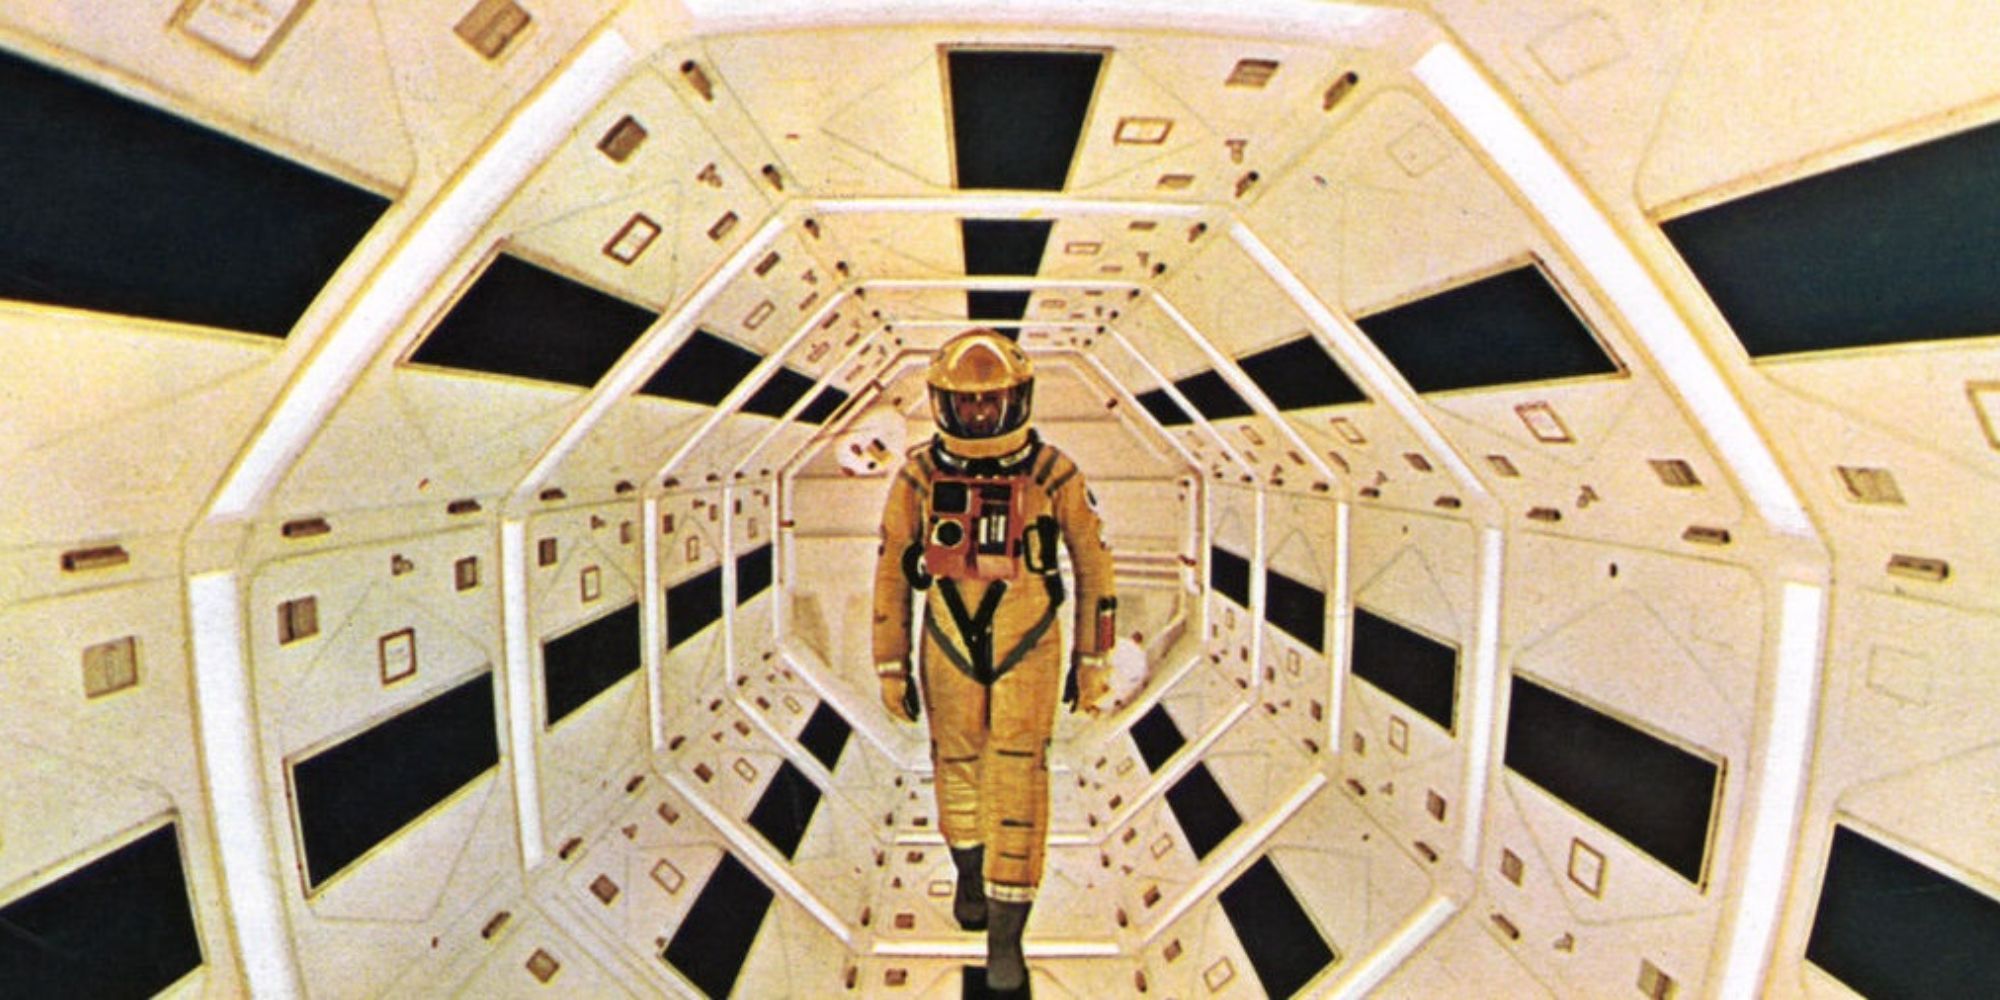 2001 A Space Odyssey (1968) (1)